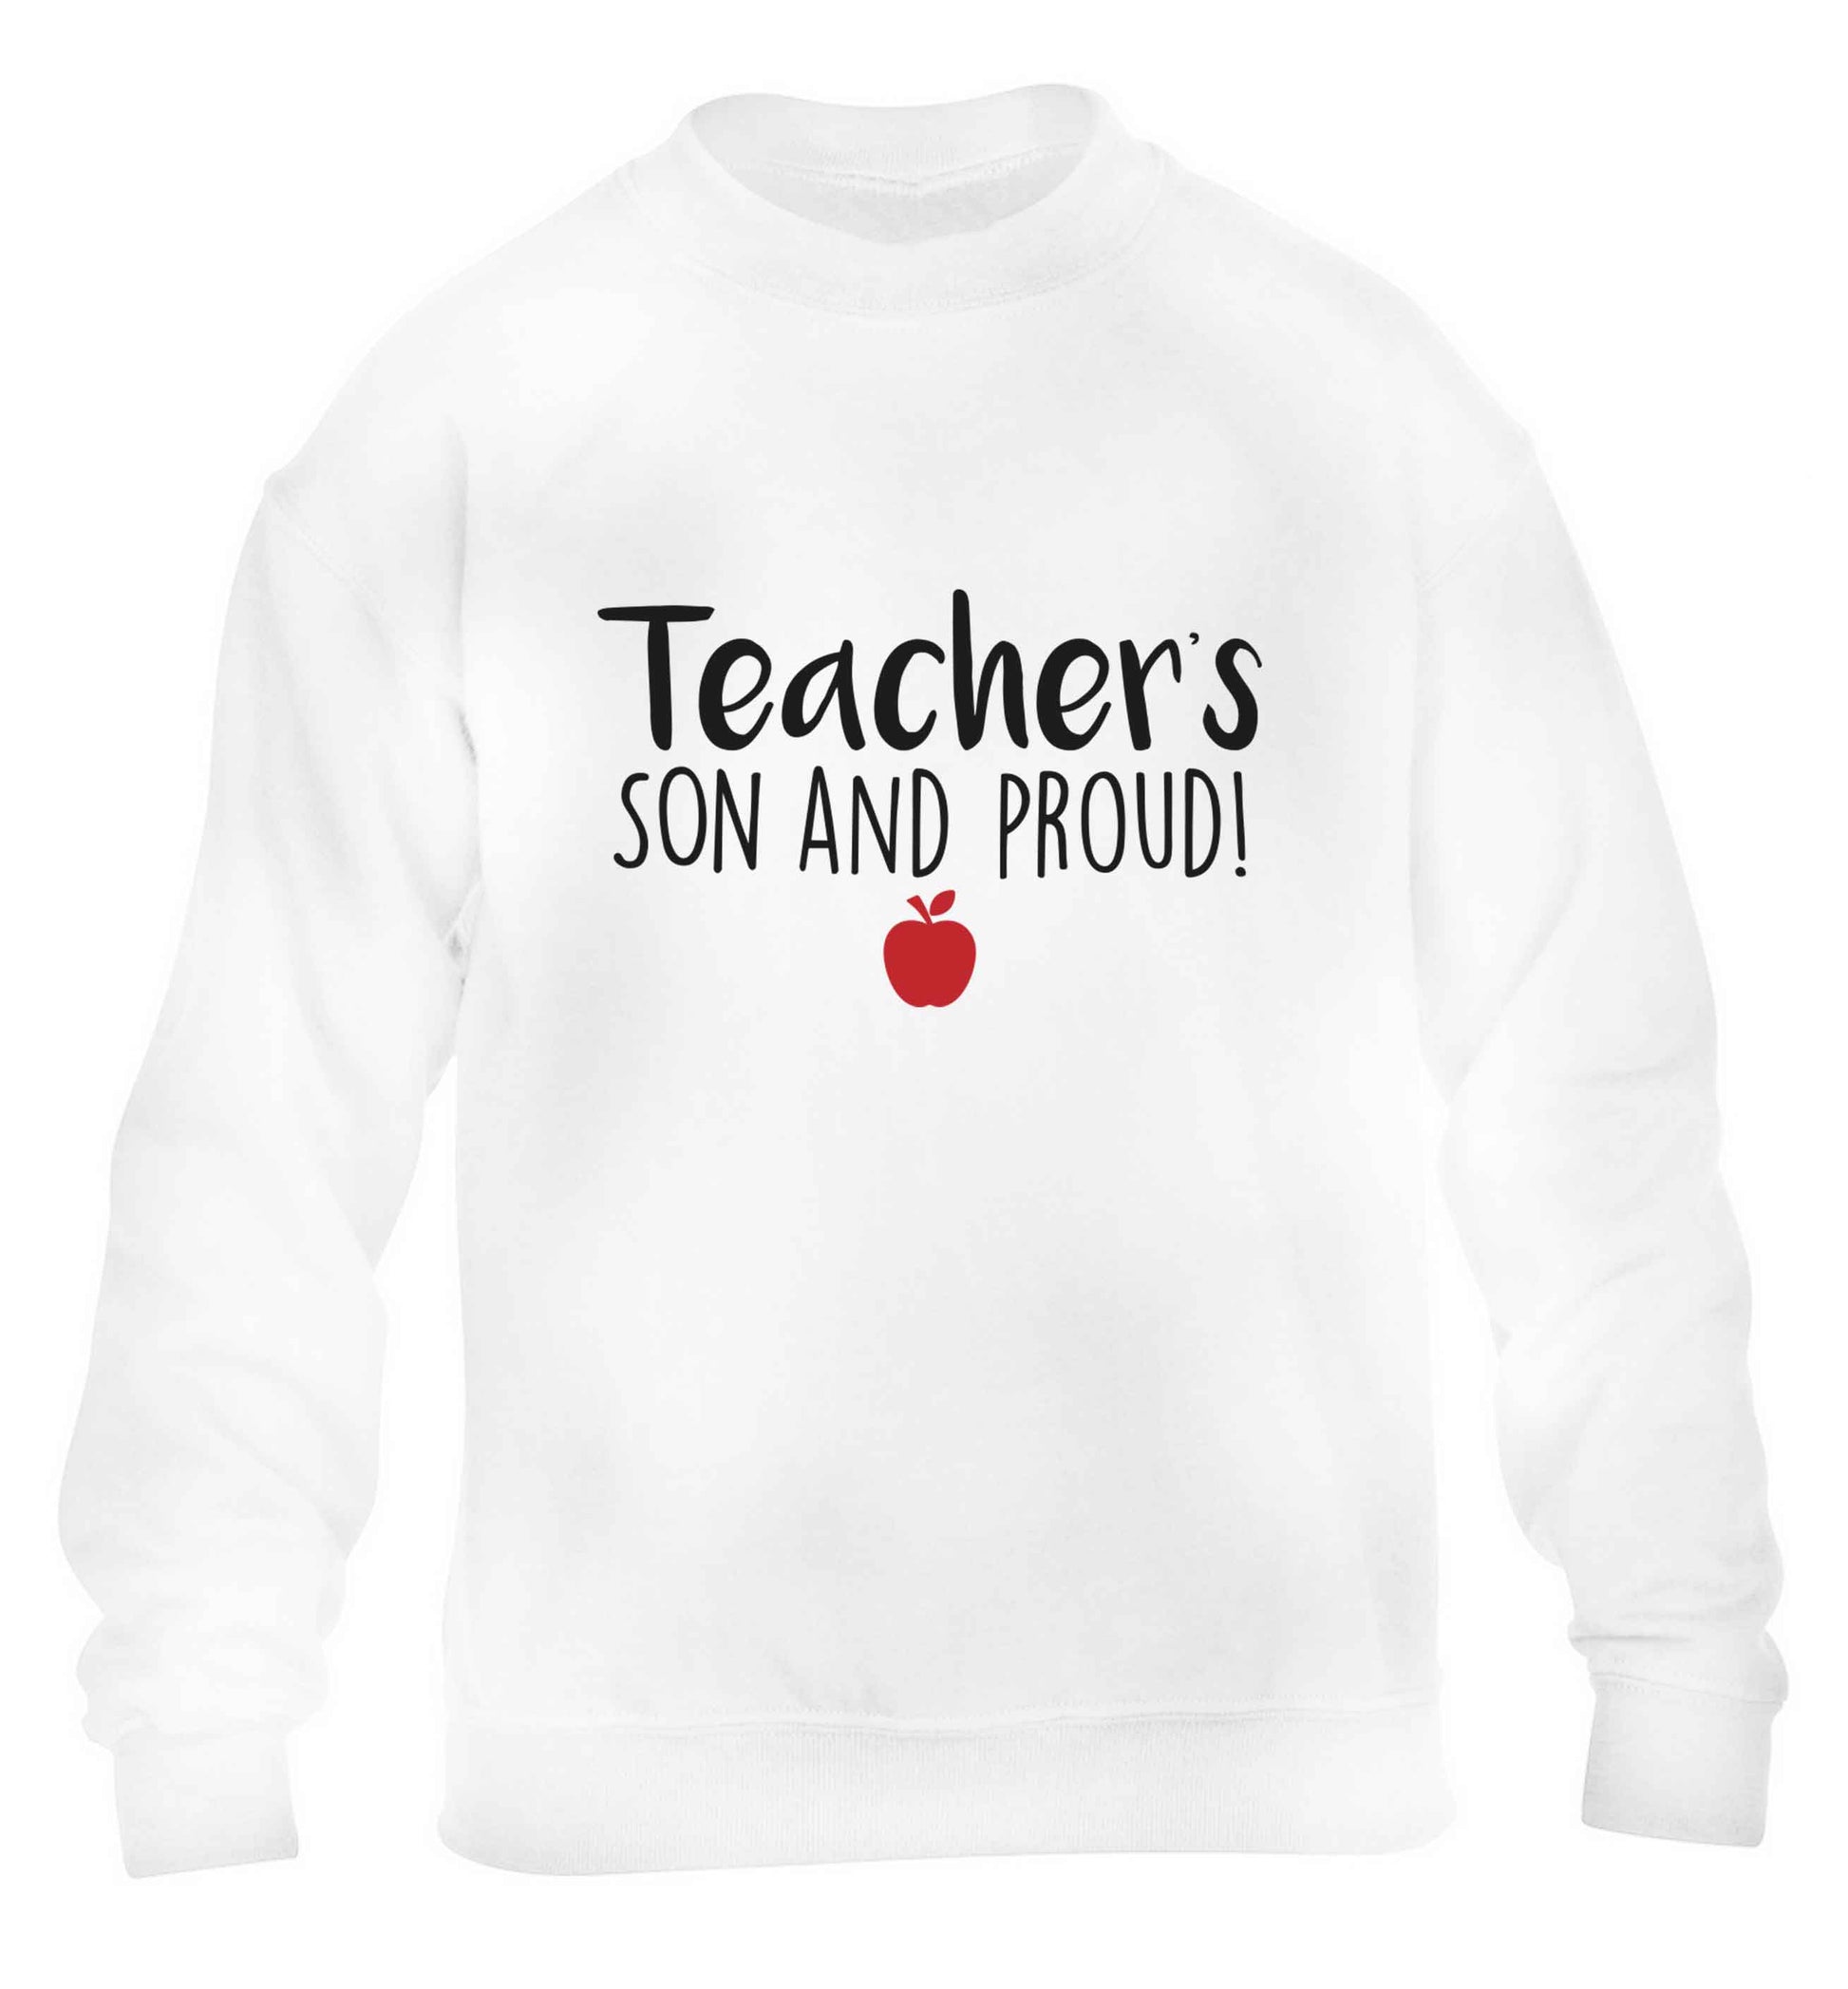 Teachers son and proud children's white sweater 12-13 Years